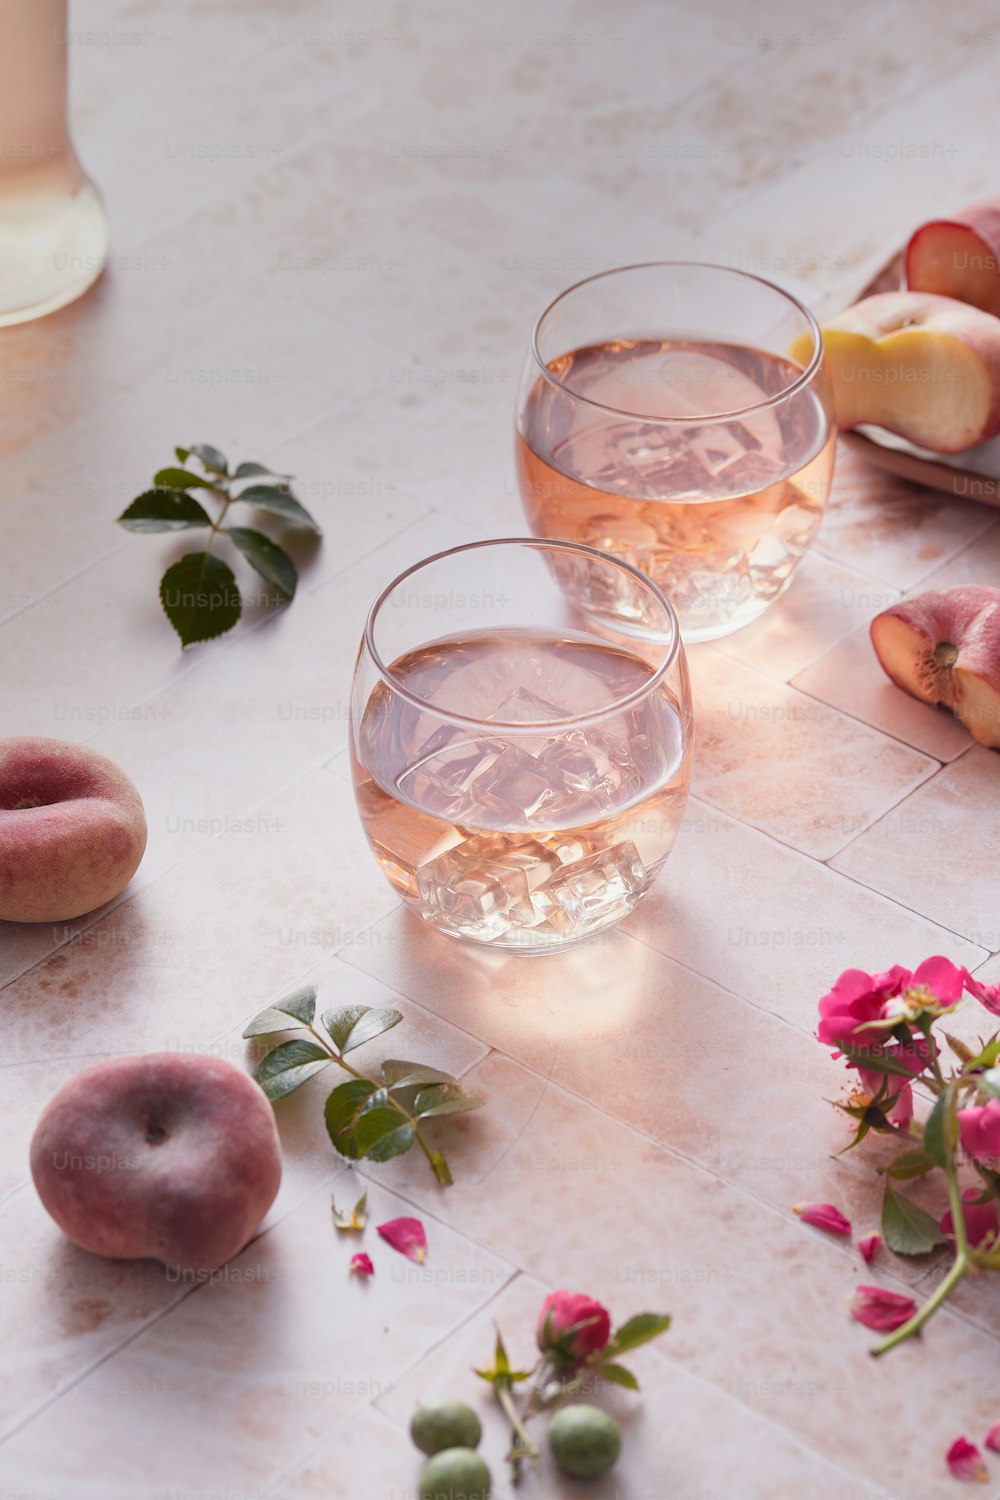 une table garnie de verres de vin et de fruits